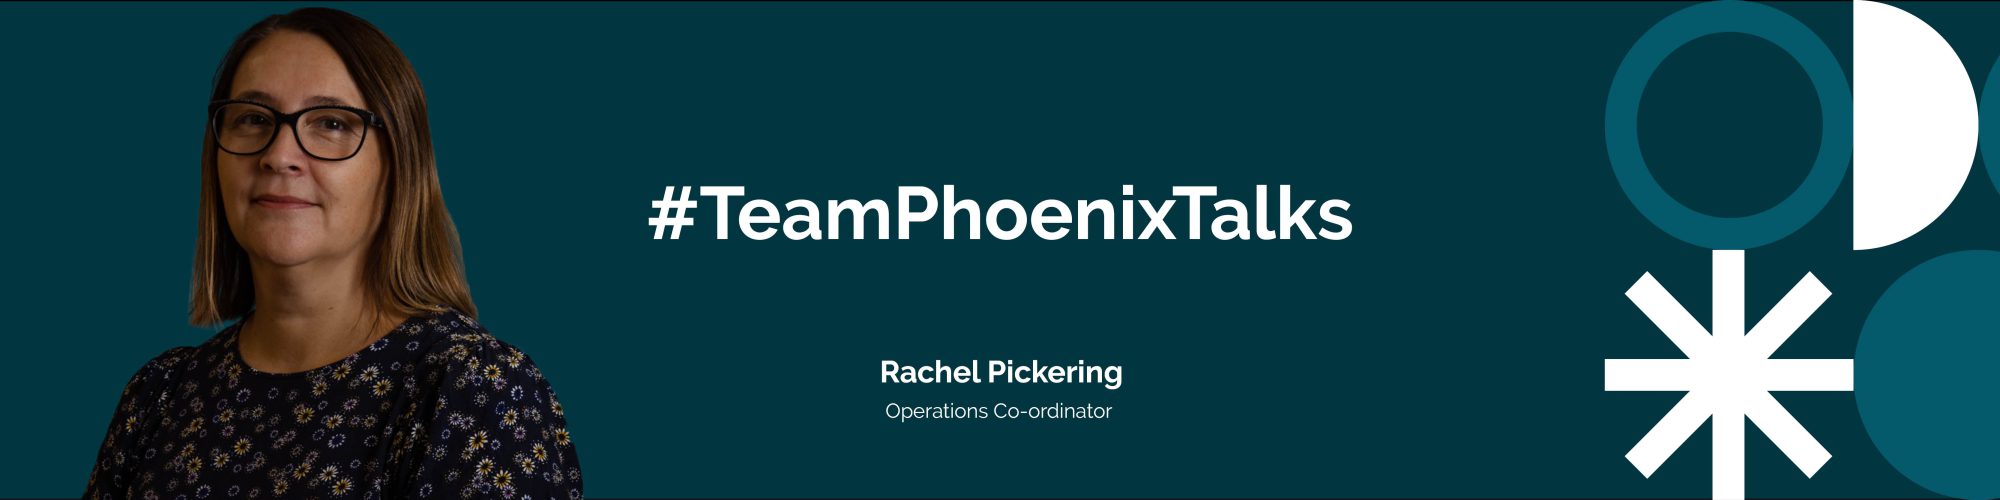 Team Phoenix Talks: Rachel Pickering